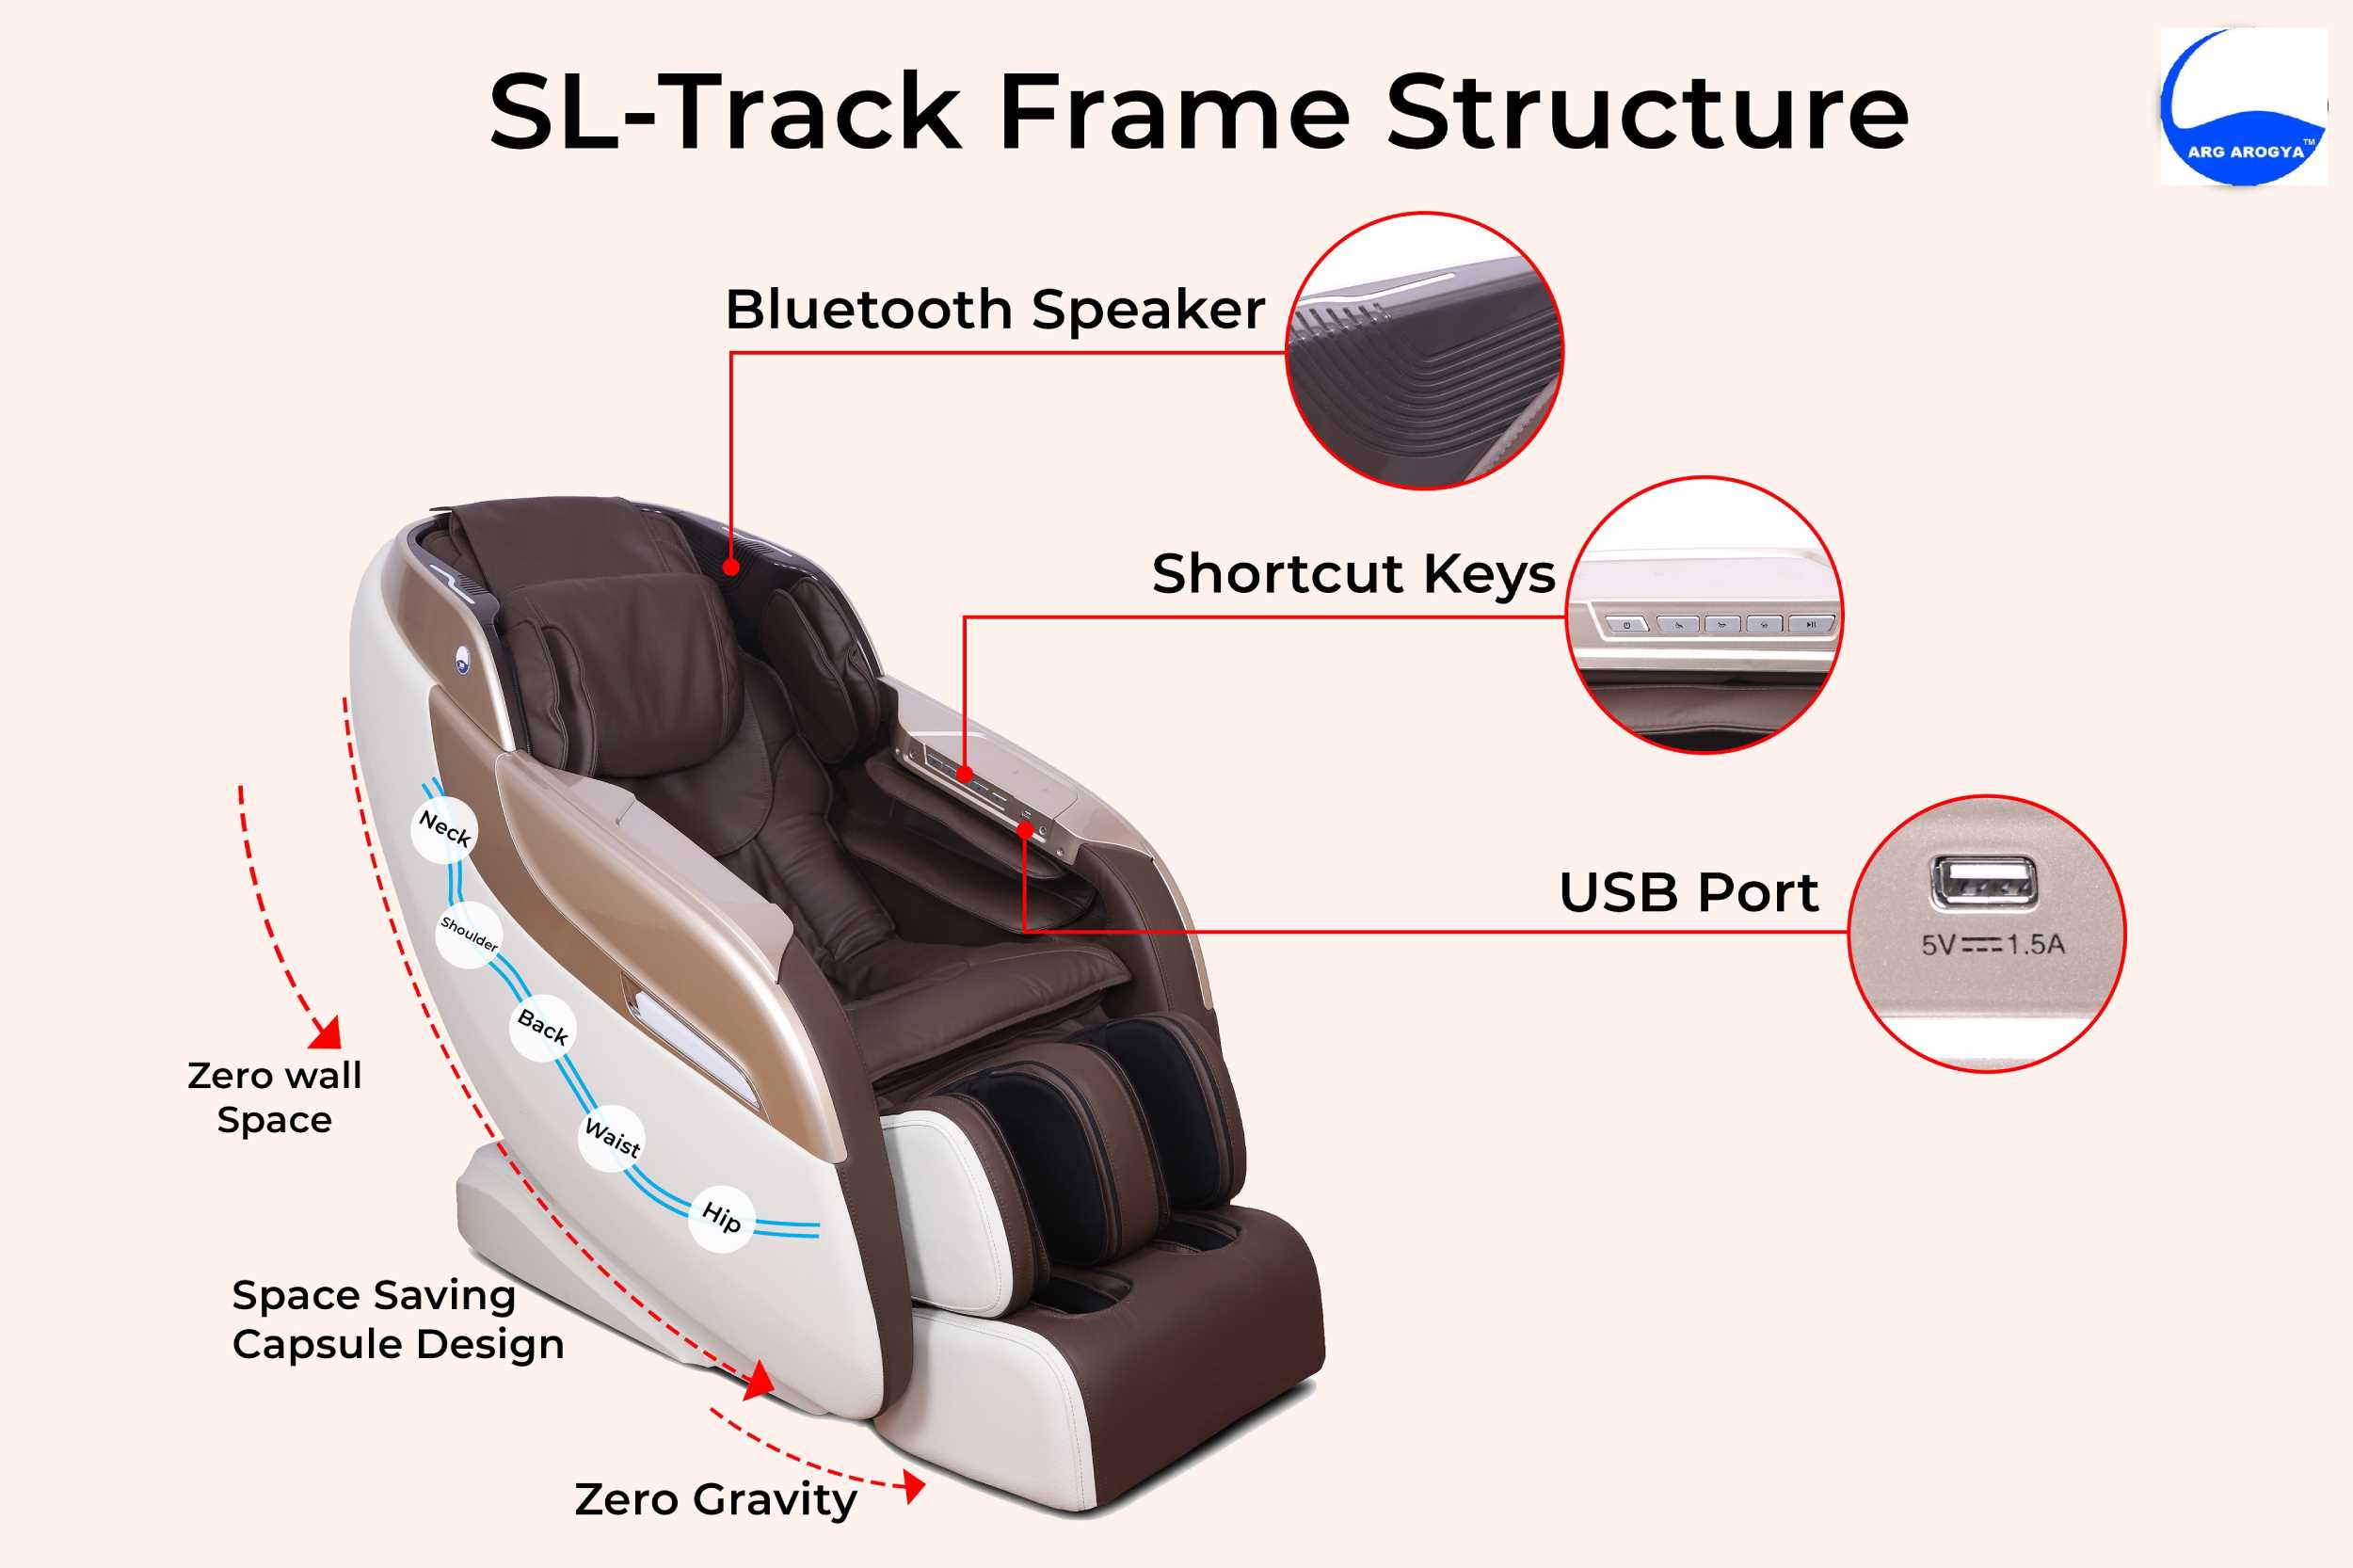 3D Massage Chair - ARG R657